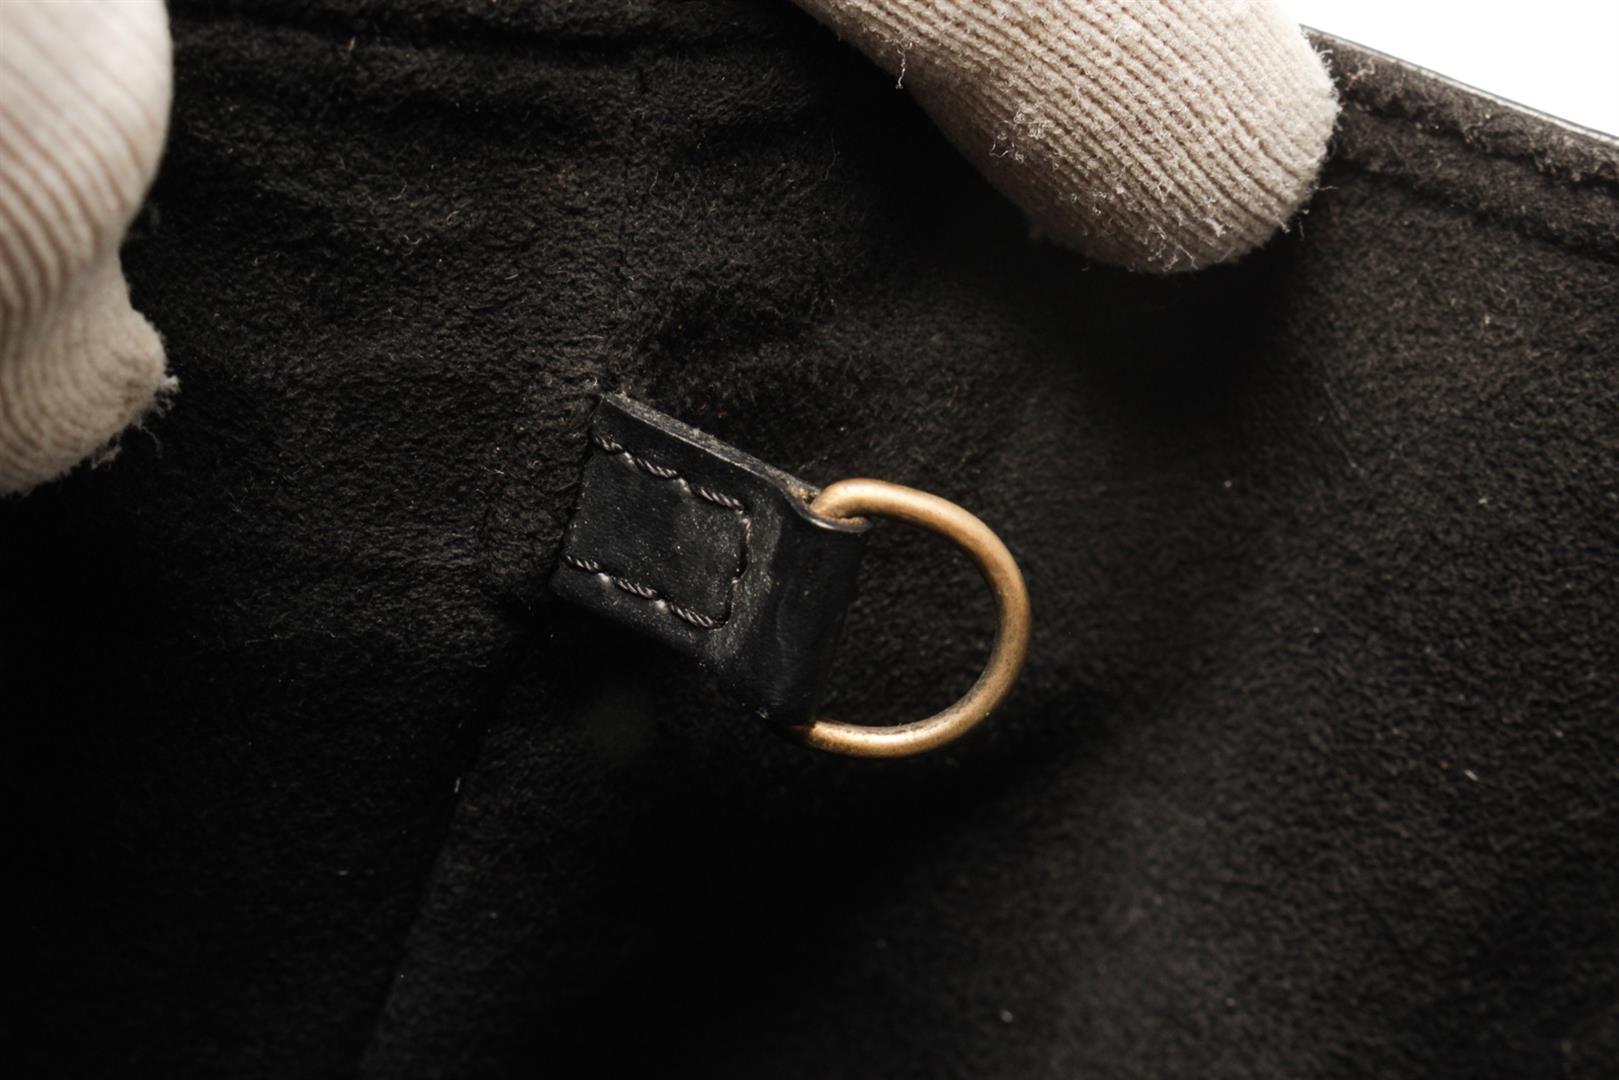 Louis Vuitton Black Epi Leather Sac Depaule Shoulder Bag